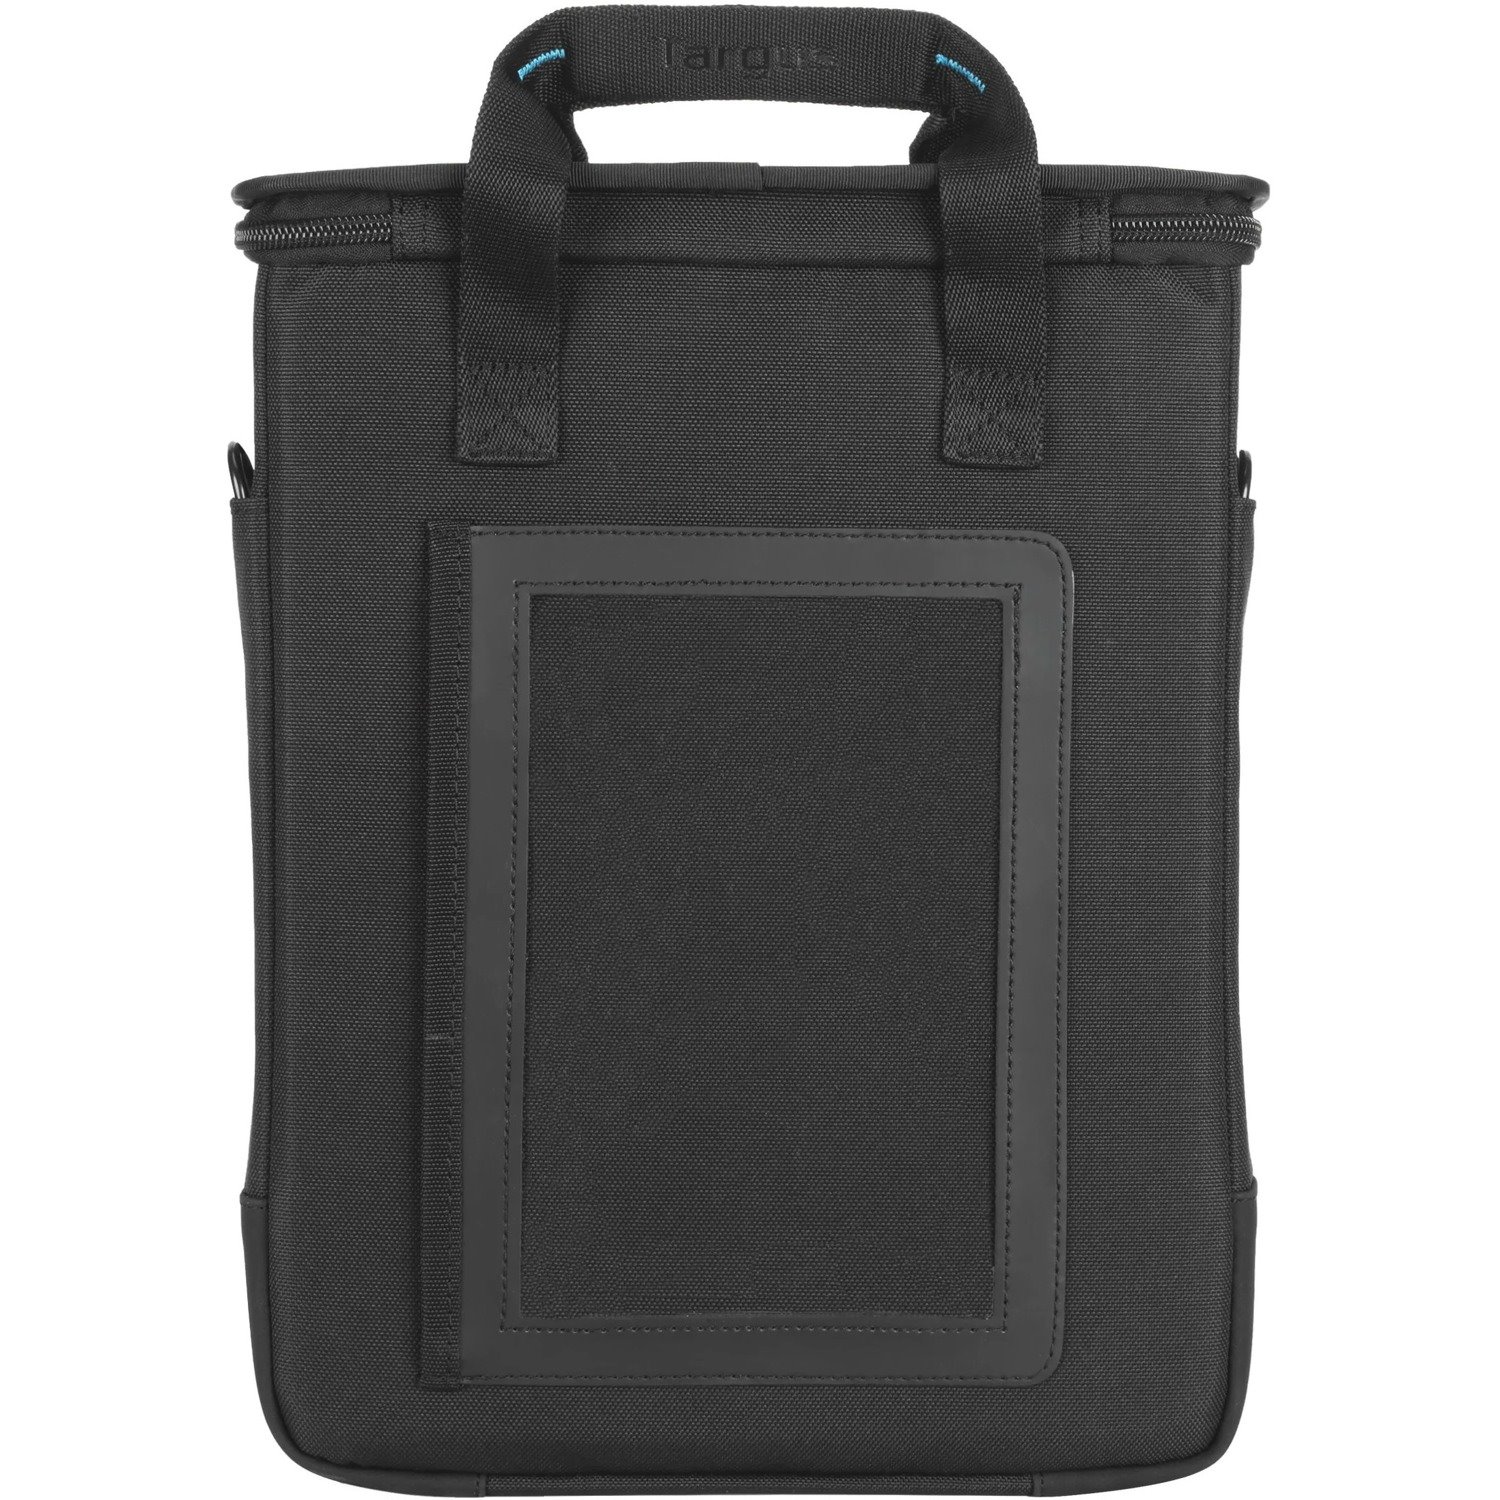 Targus TANC TBT280GL Carrying Case for 27.9 cm (11") to 30.5 cm (12") Apple MacBook - Black